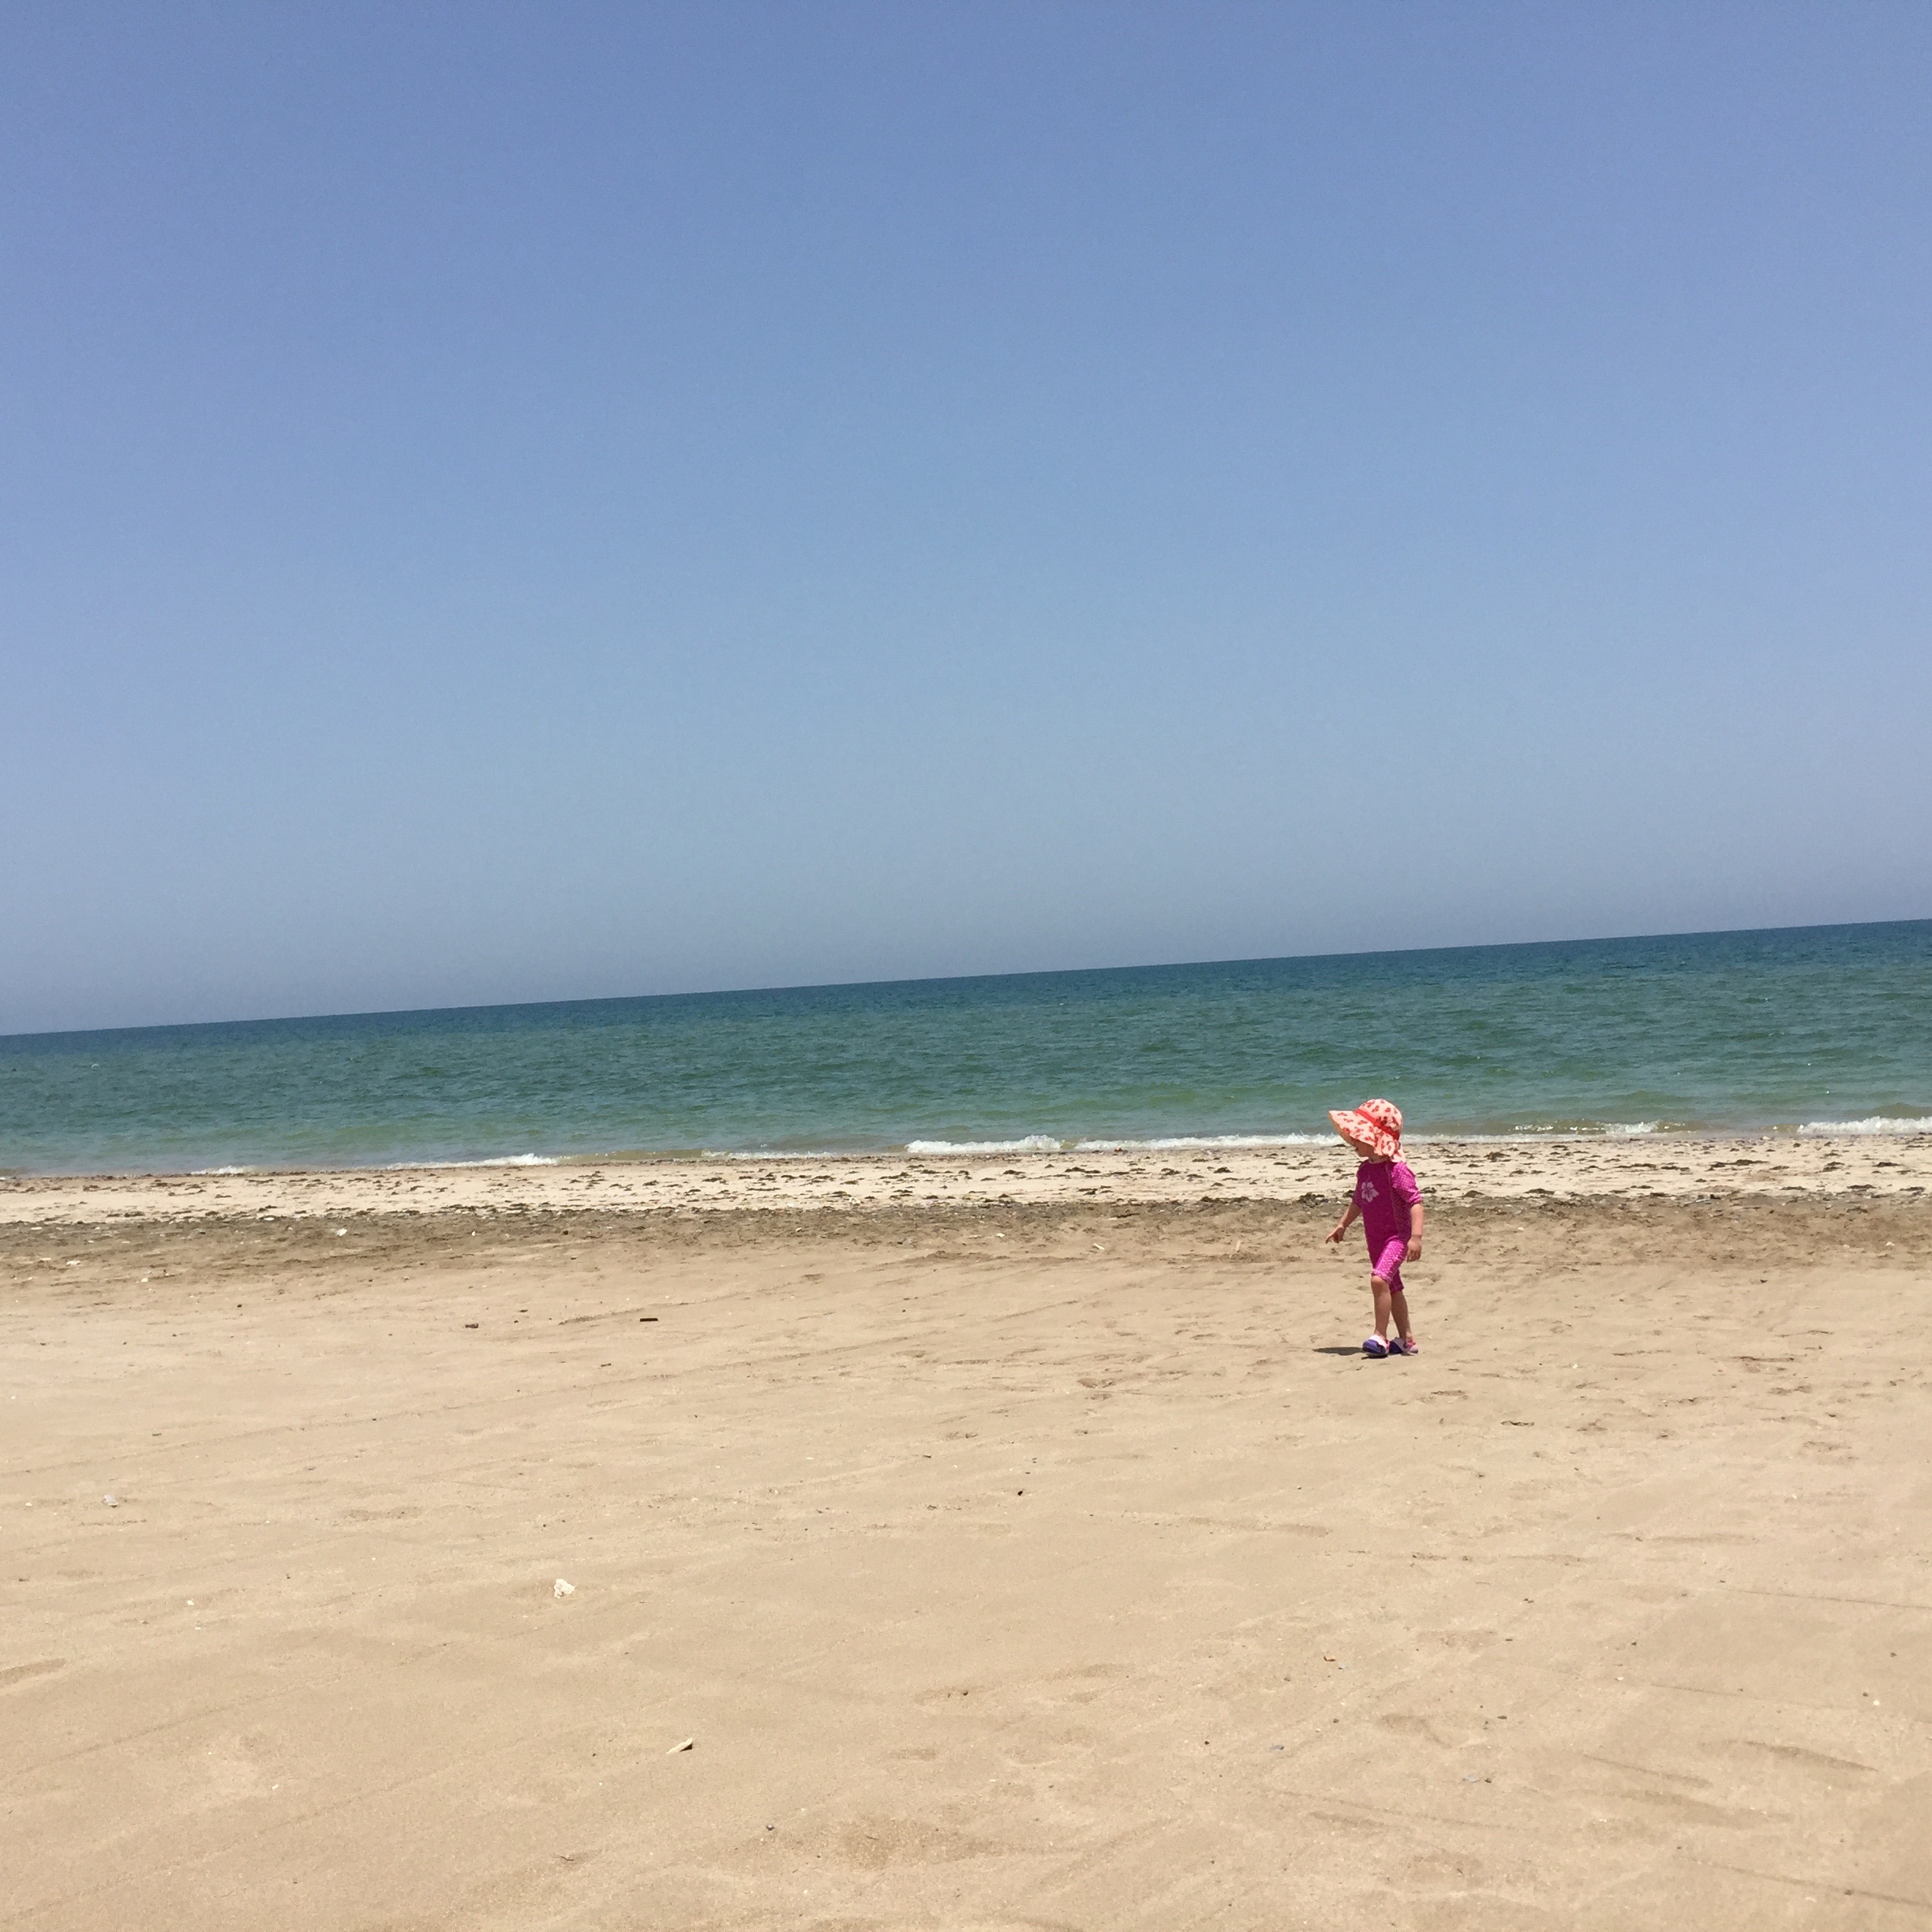 The Chedi beach, Muscat, Oman